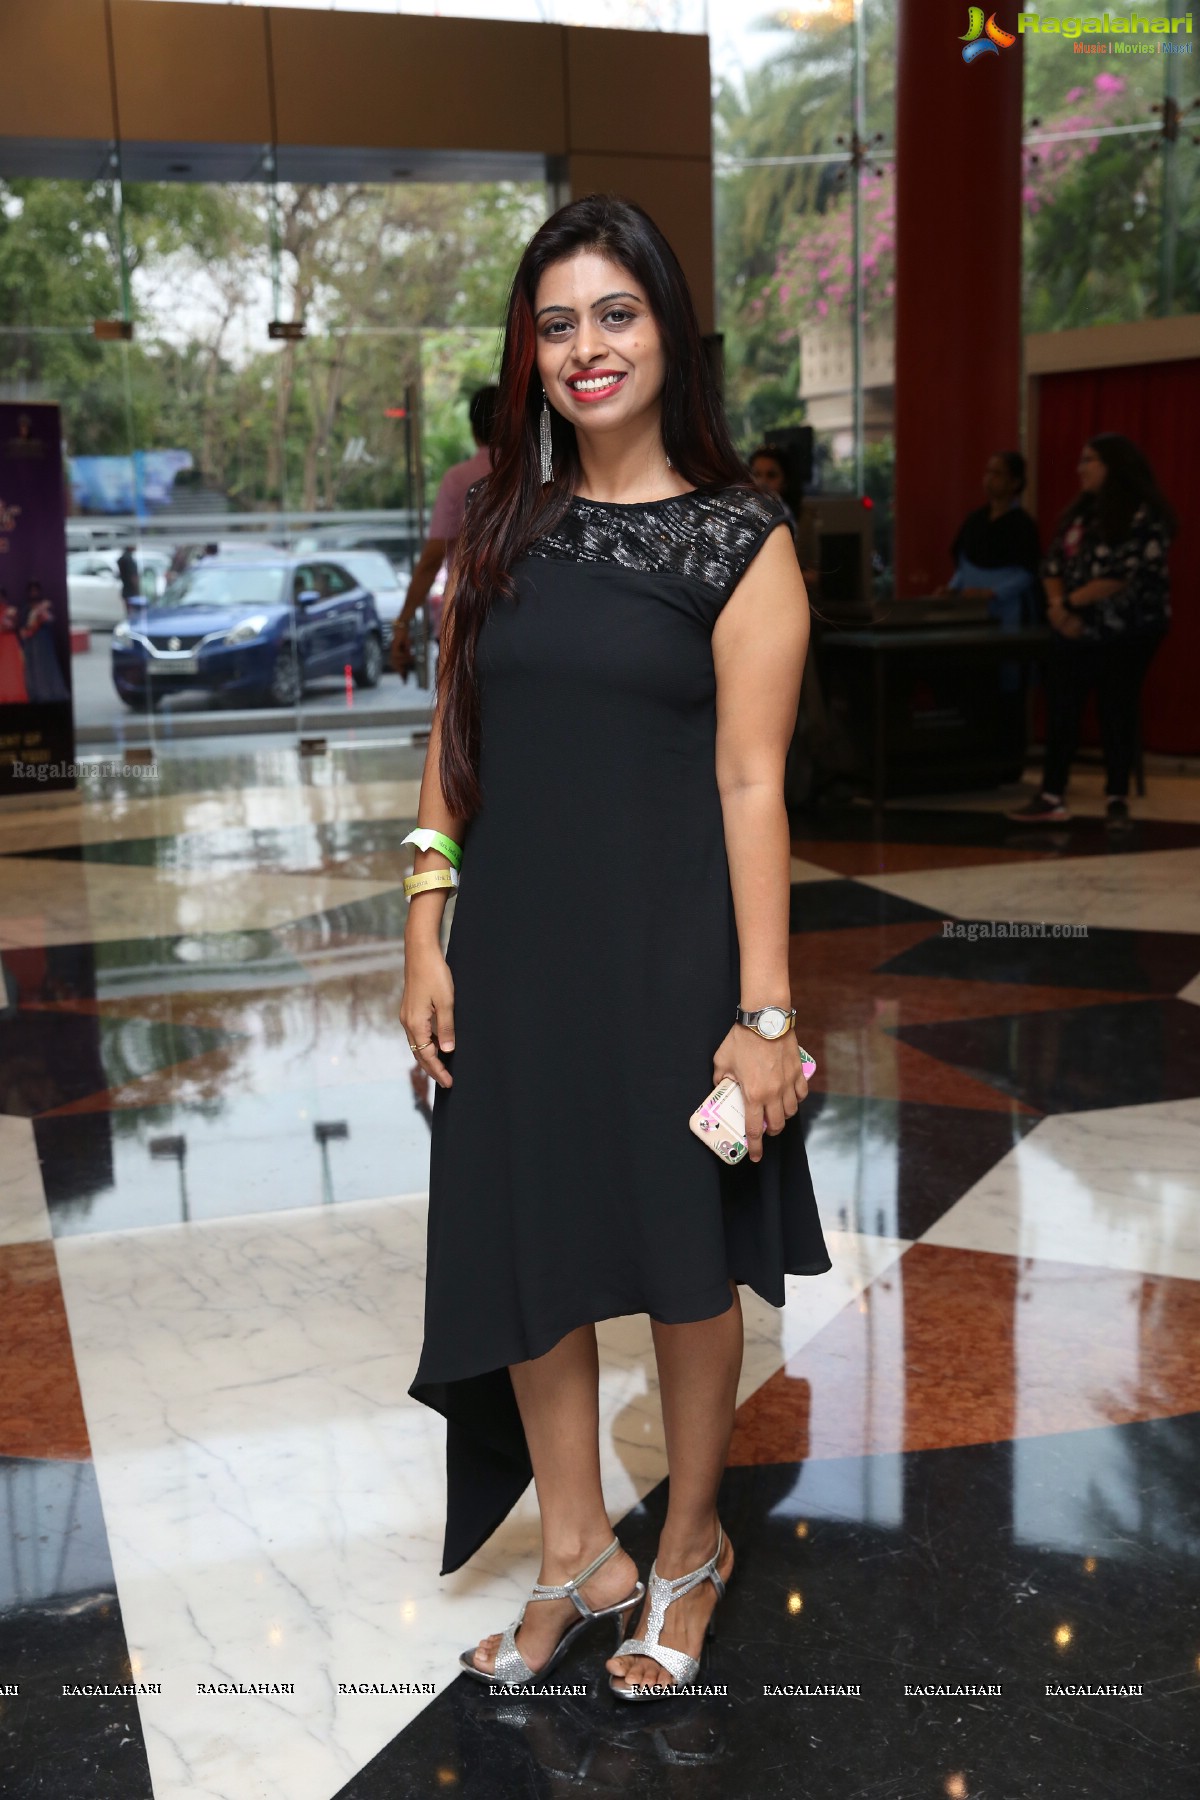 Mrs India Telangana 2019 Grand Finale at Hotel Marriott